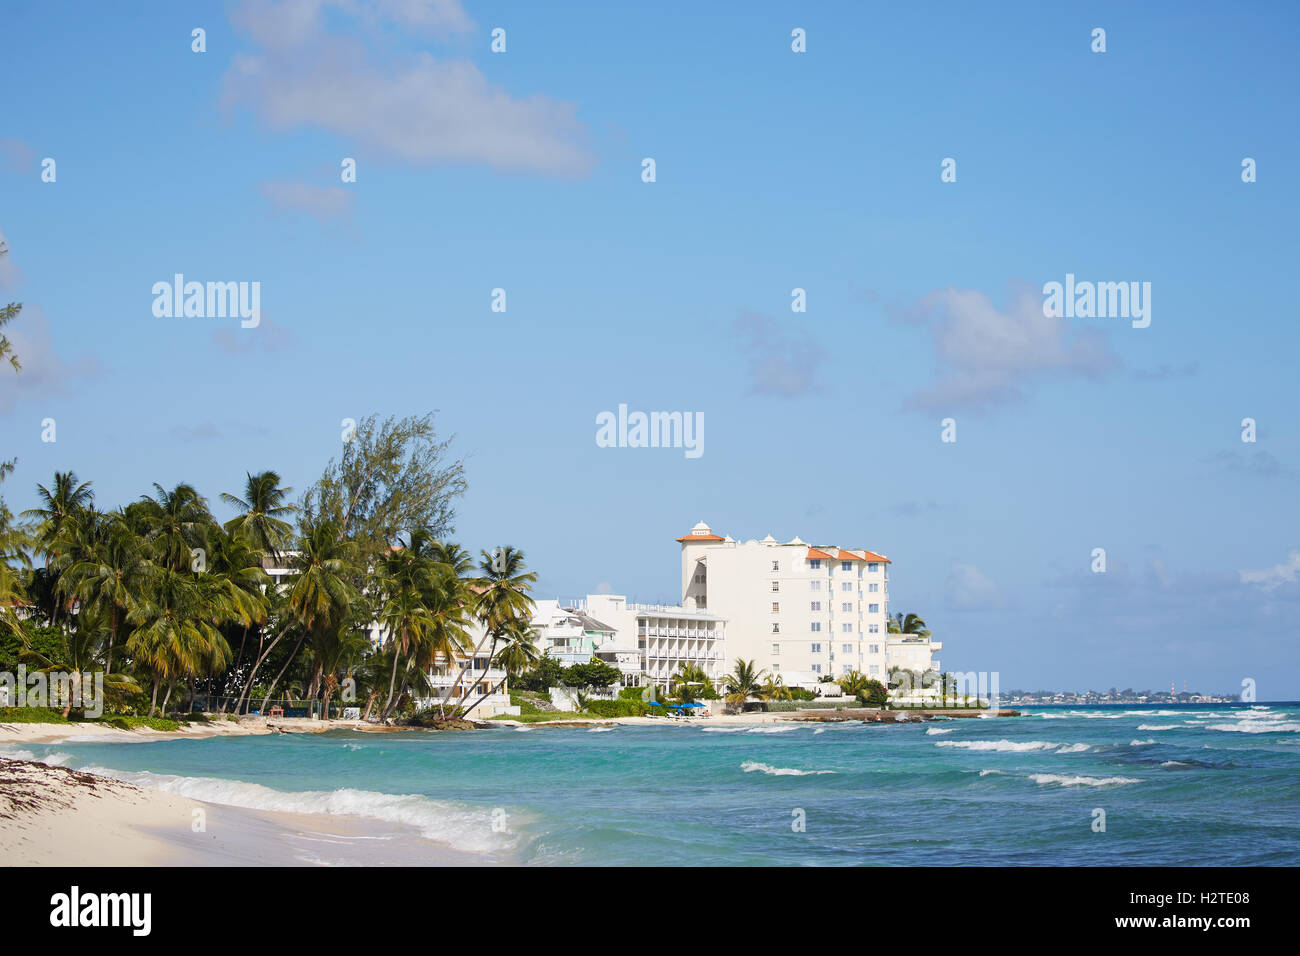 Barbados Hastings Bay hotels   Man swimming in the bay beach sea water black male copyspace palm trees near Carlisle Bay sunny b Stock Photo